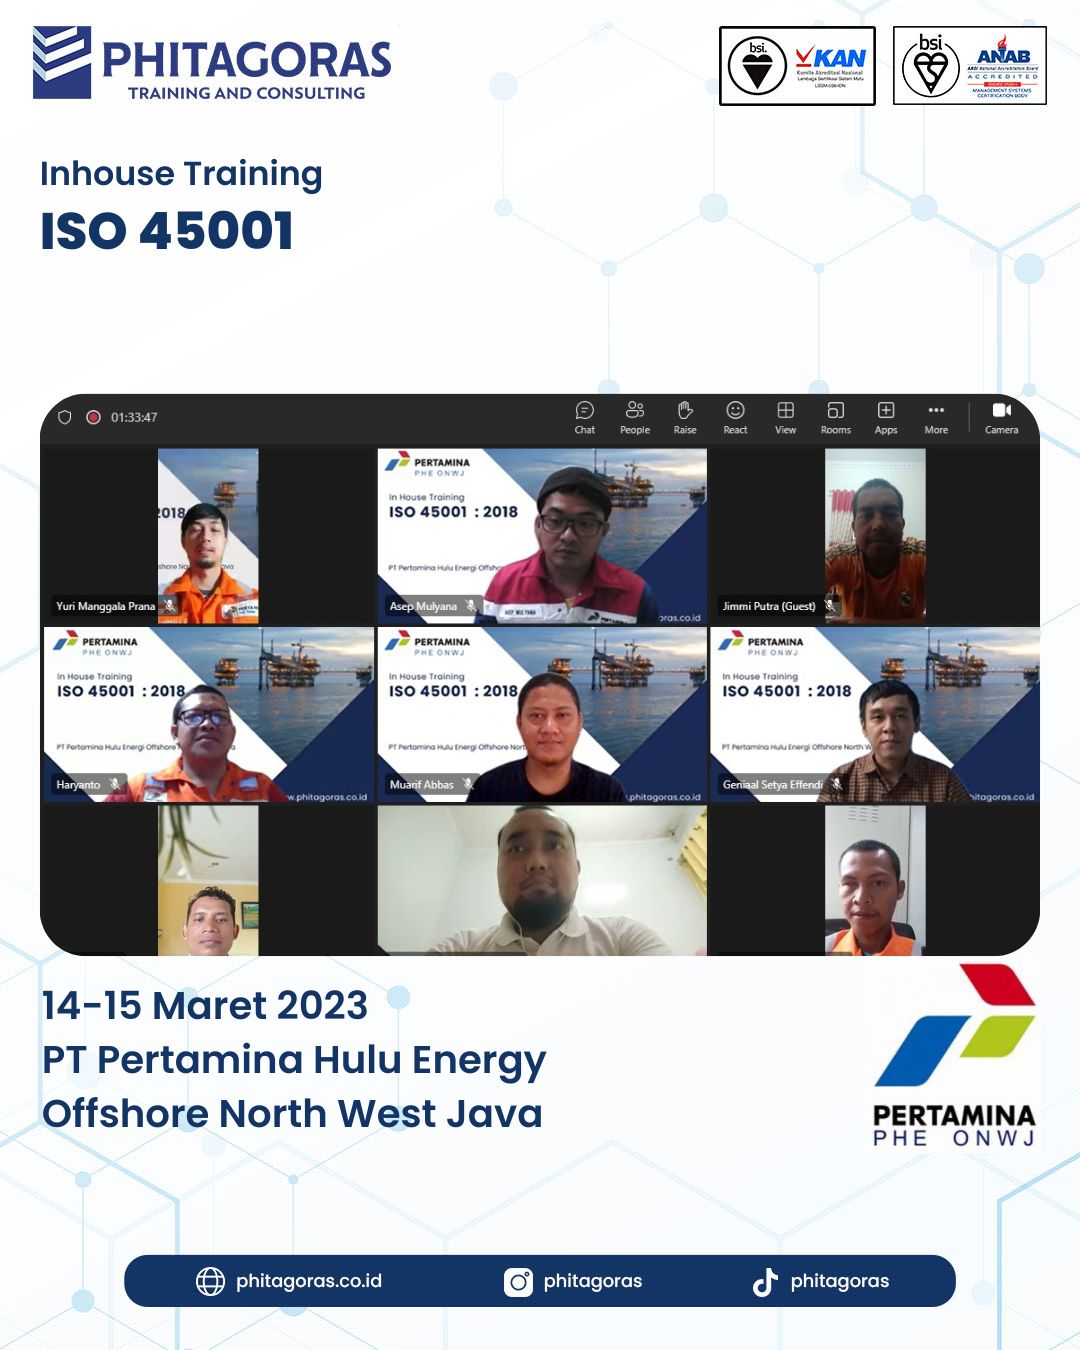 Inhouse Training ISO 45001 - PT Pertamina Hulu Energy Offshore North West Java